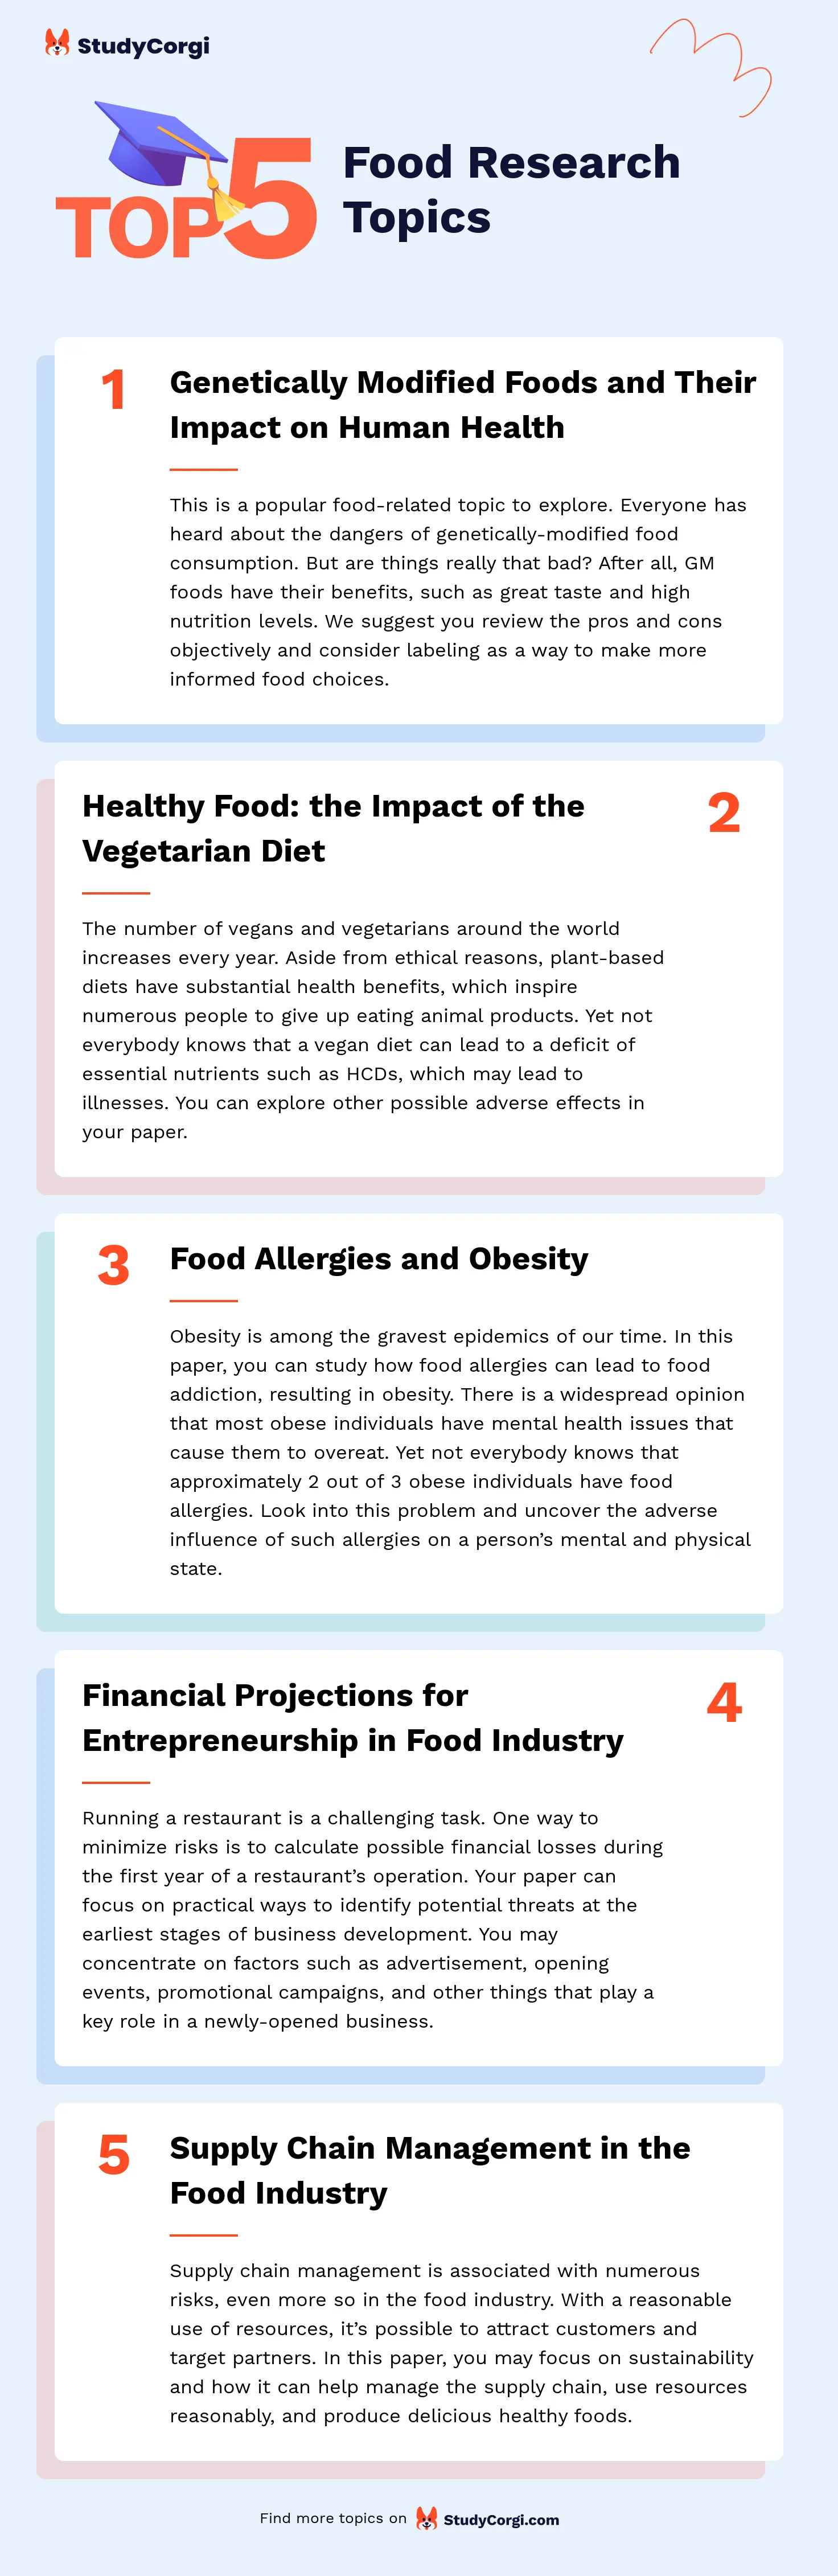 TOP-5 Food Research Topics